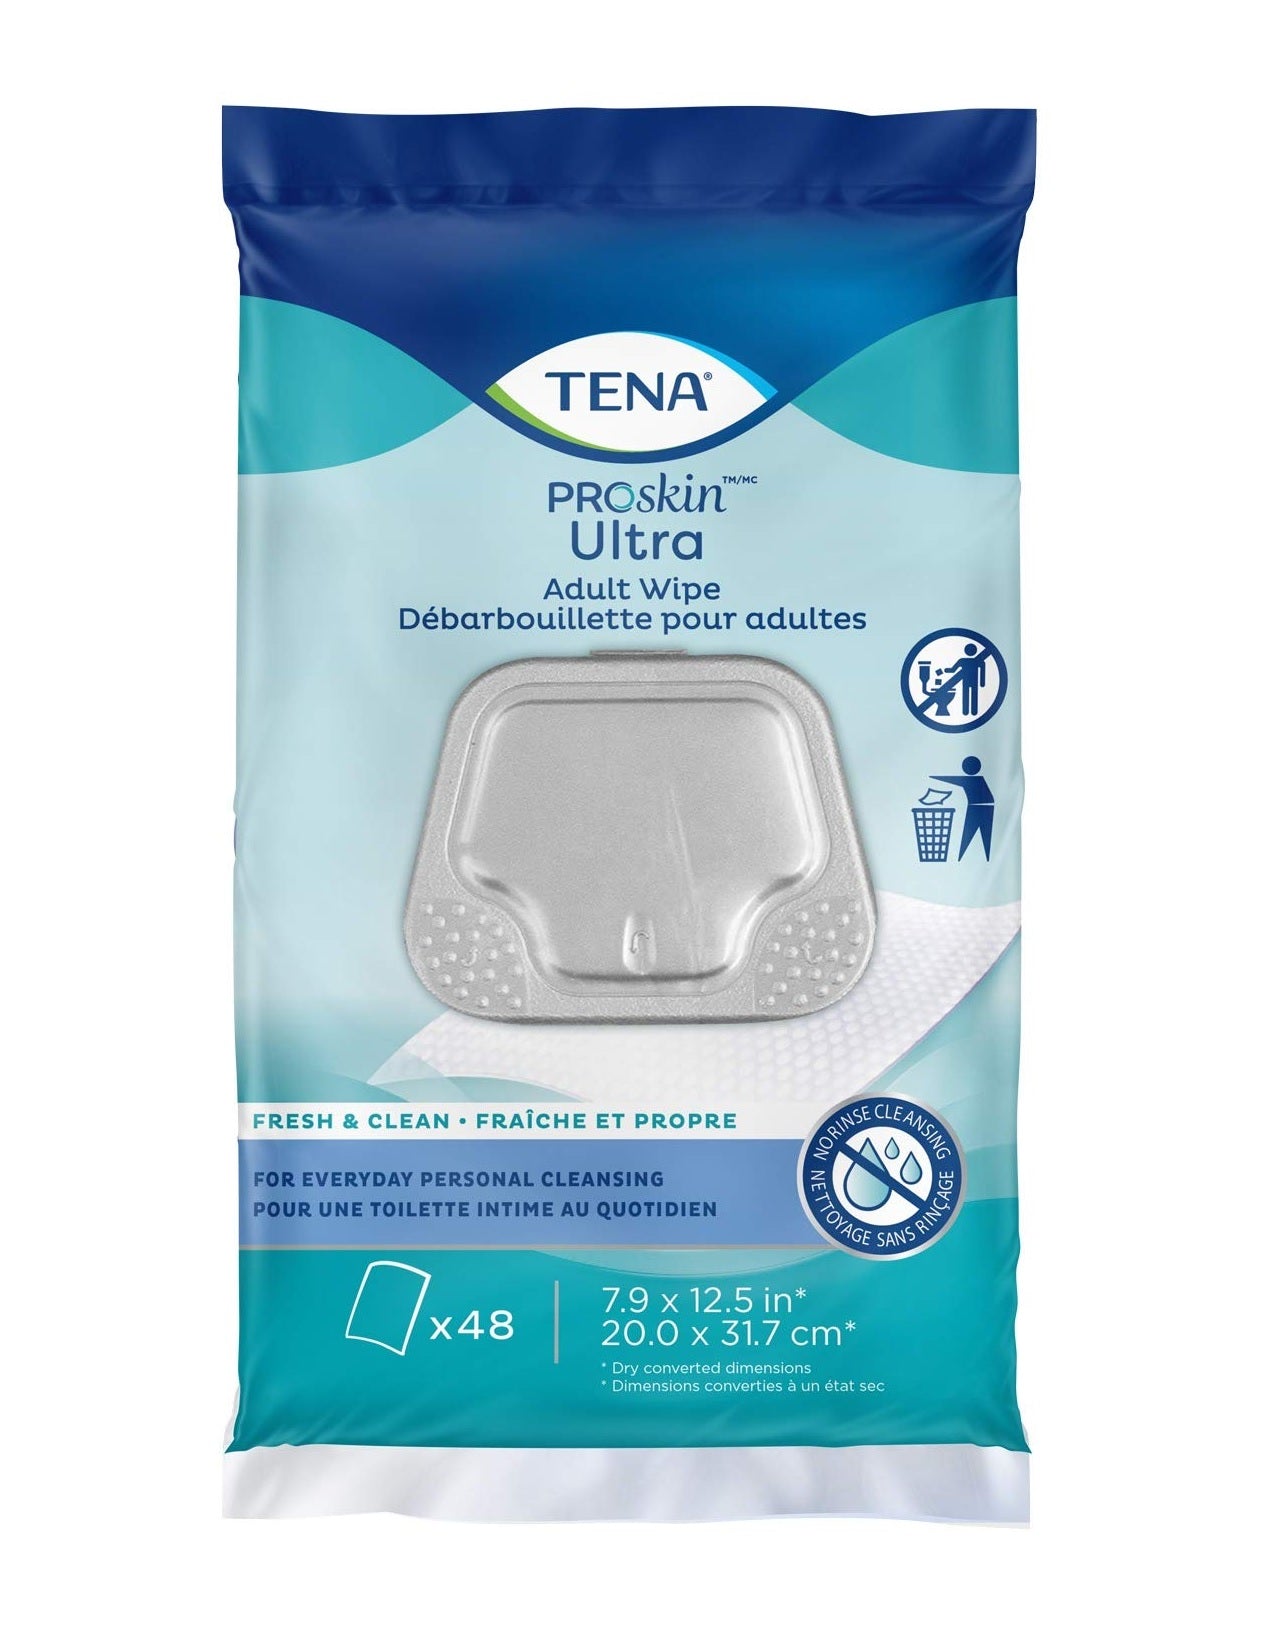 Tena ProSkin Ultra Adult Wipe - 48ct/4pk